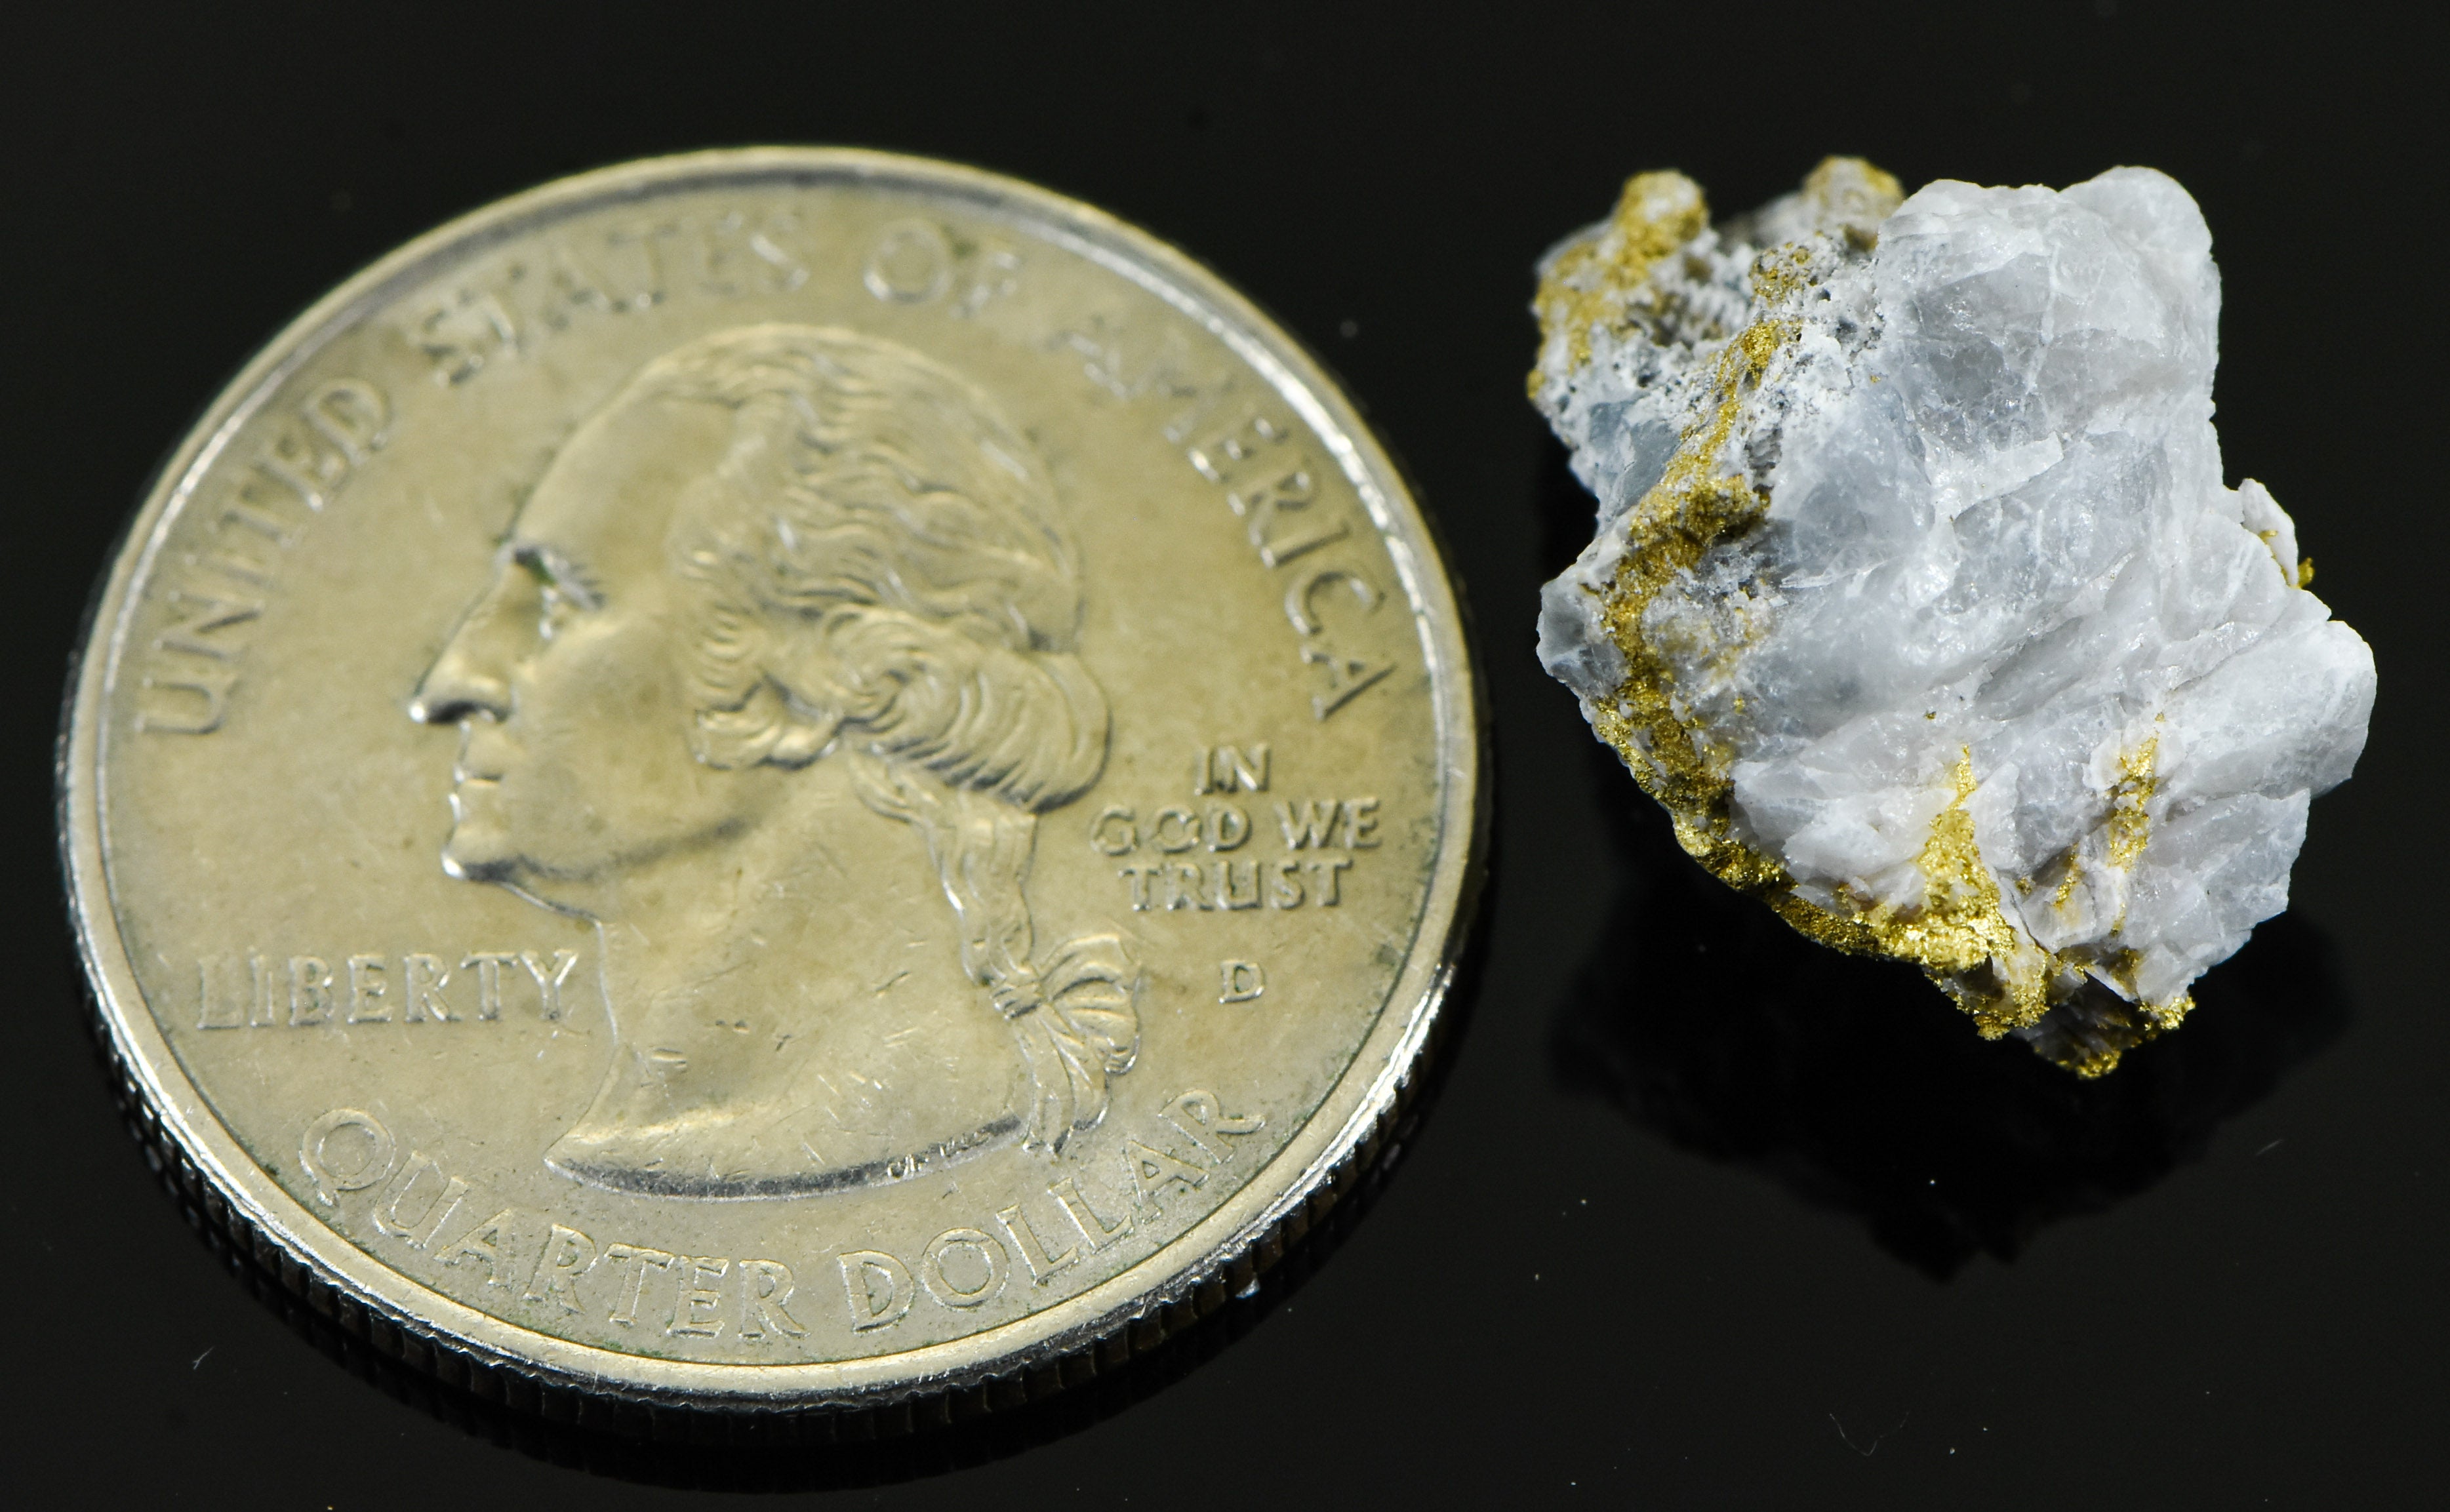 #OM-40 Crystalline Gold Nugget Specimen 3.63 Grams Oriental Mine Sierra County California Rare